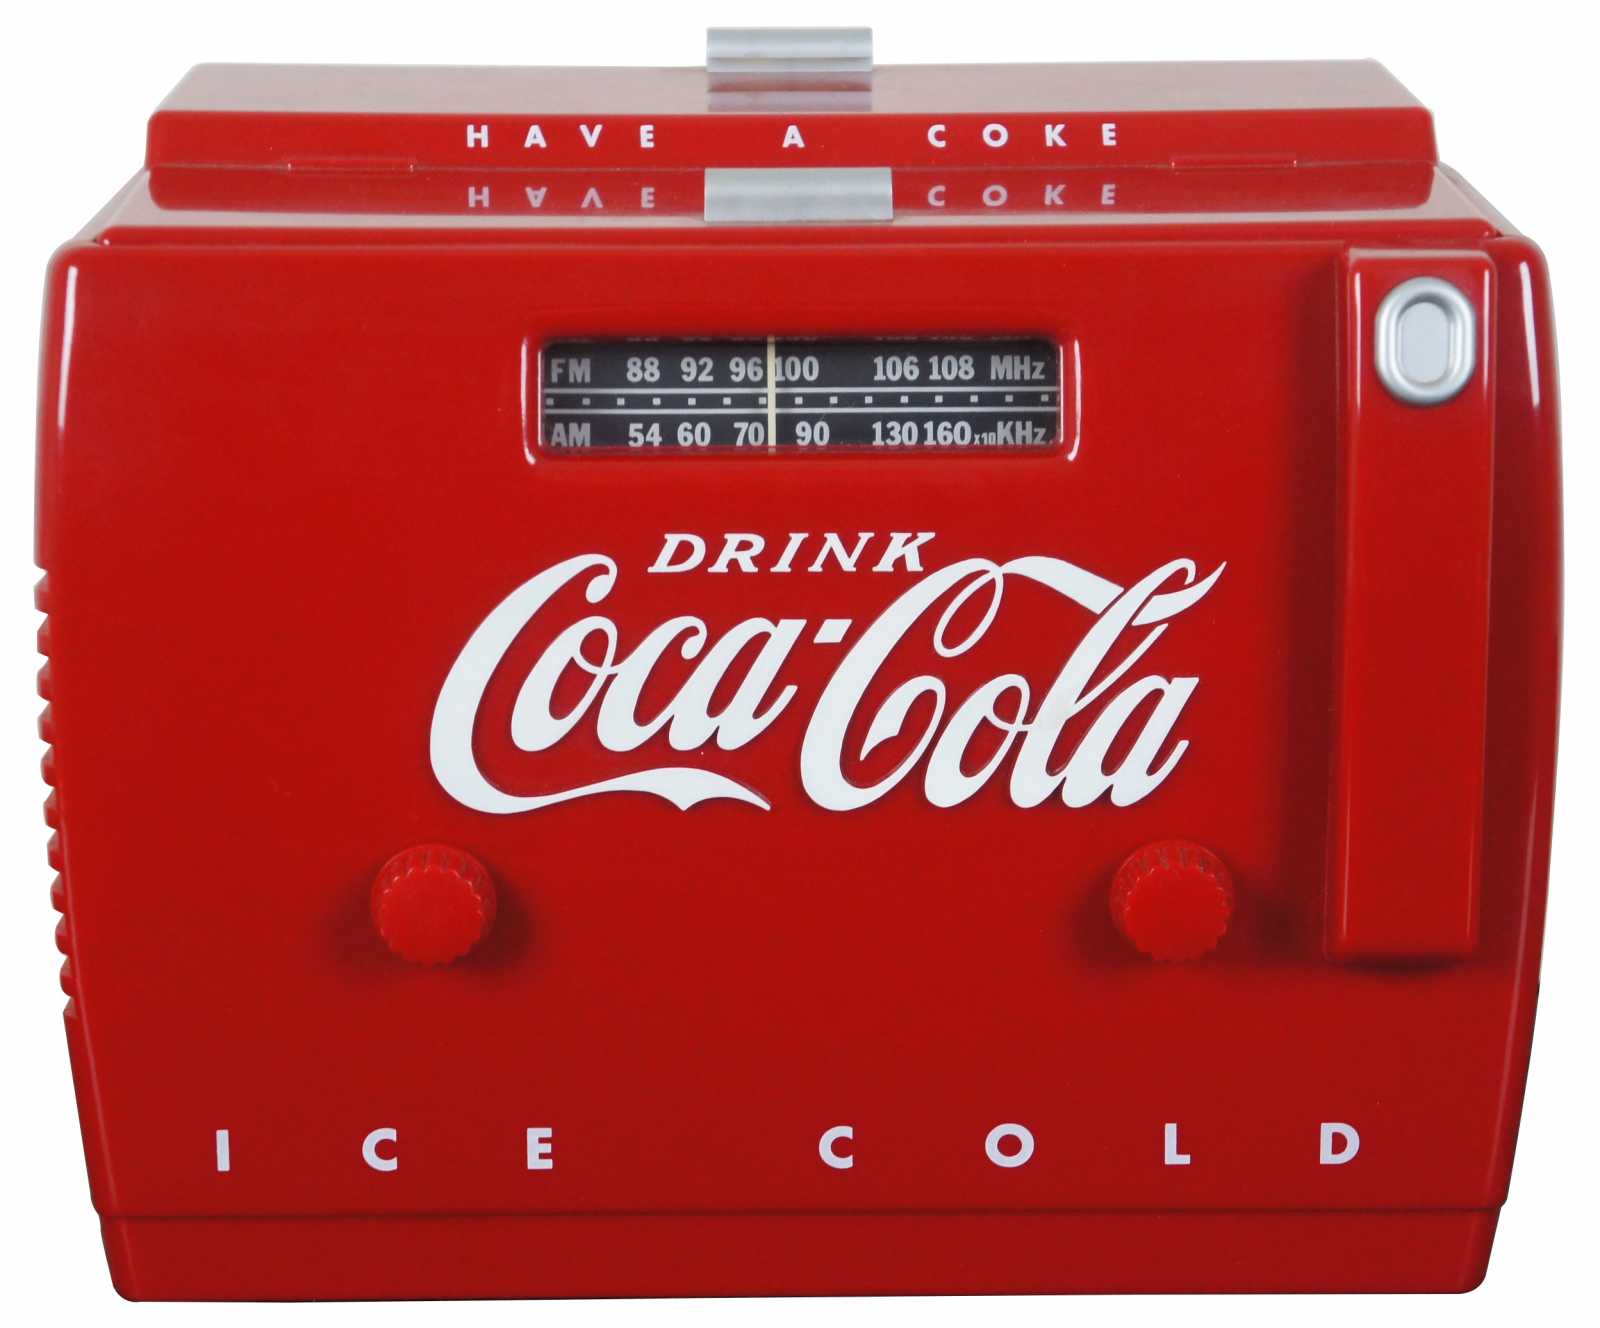 Old Tyme Coca Cola Cooler Radio Am Fm Cassette Player Coke Walt Disney Otr 1949